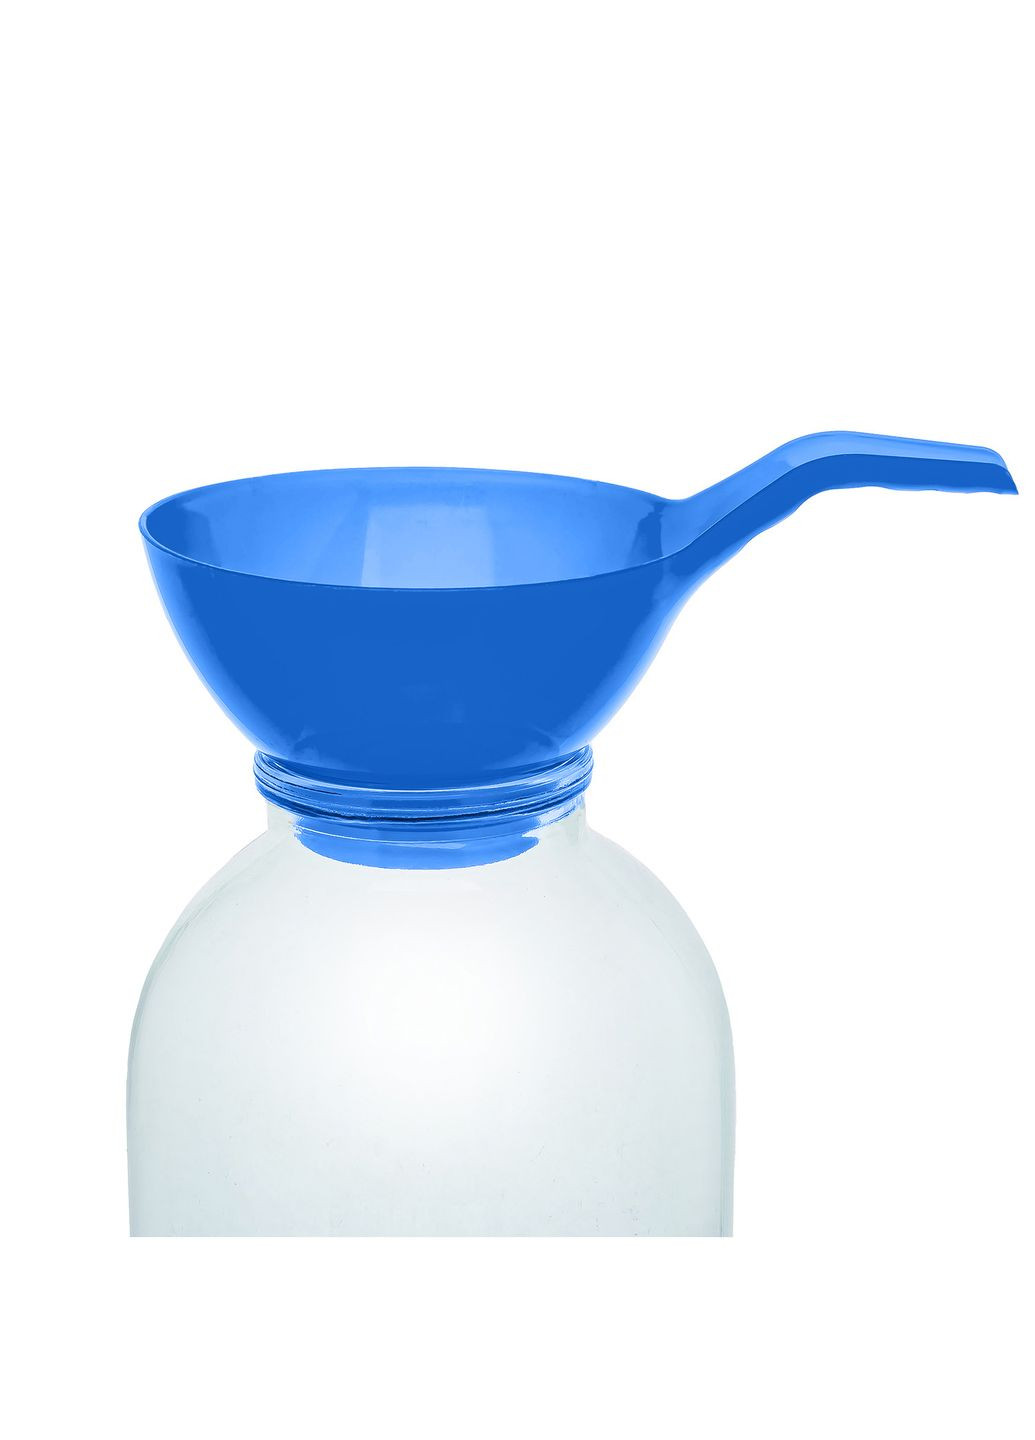 Воронка (лейка) Ø 14 см пластиковая с широким горлом на банку синяя Kitchette (274060217)